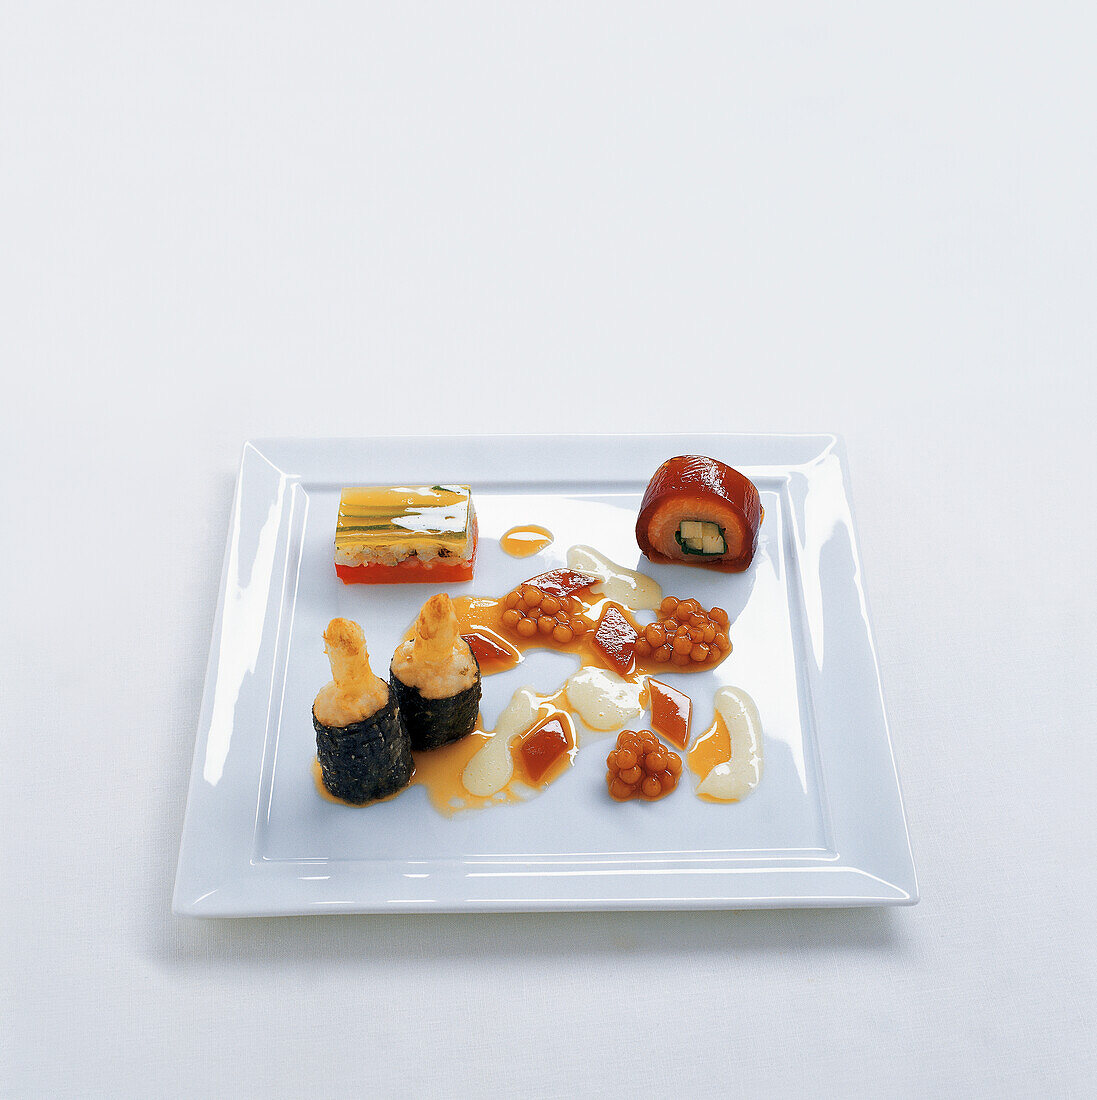 Yuzu marinade with yellowfin mackerel, asparagus tempura and soy jelly